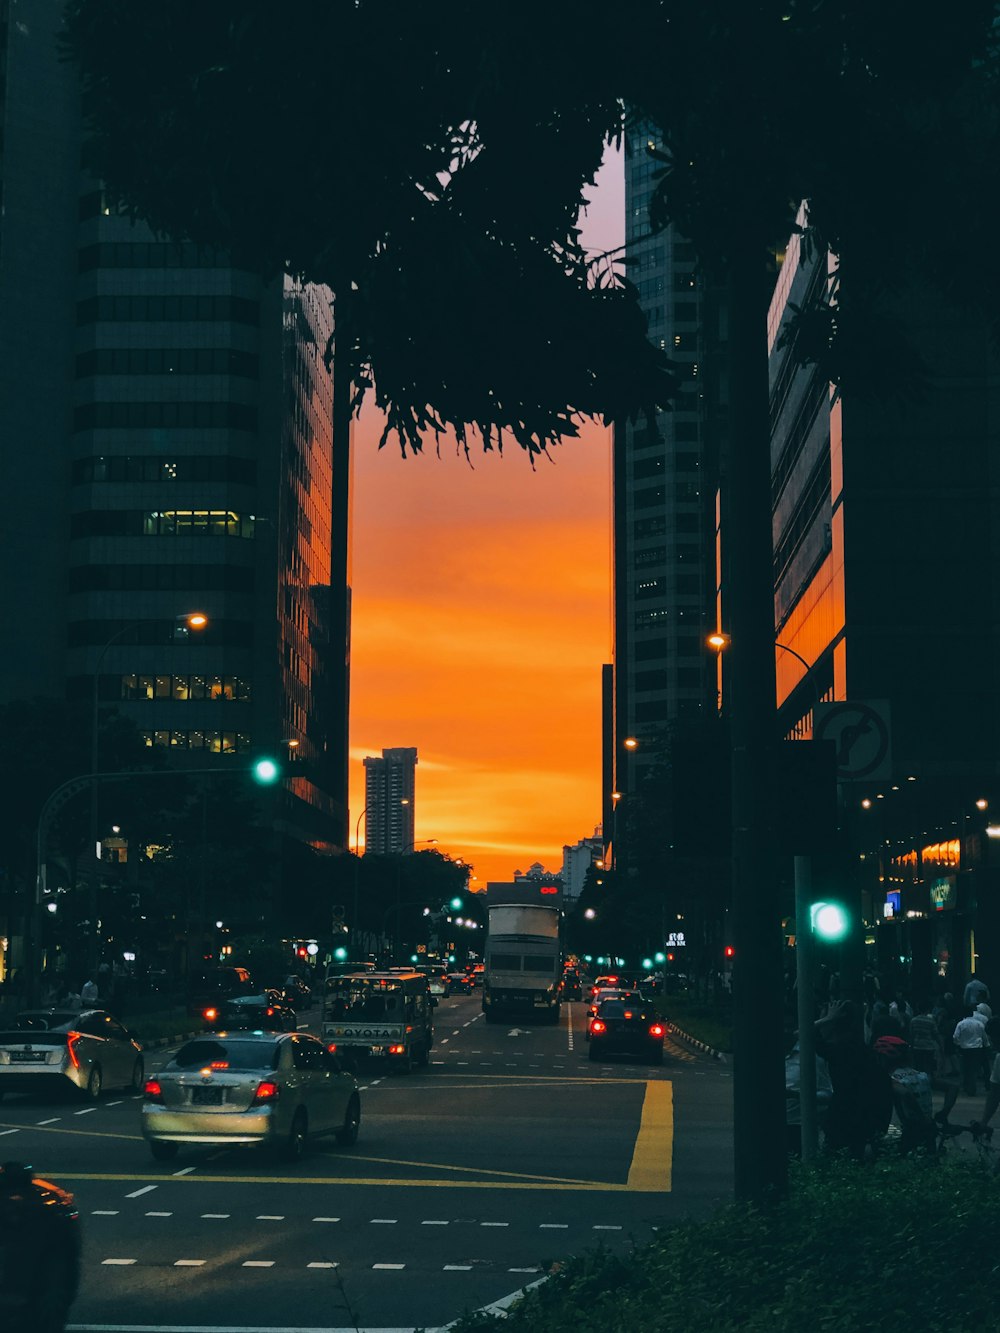 cars in city street under orange sky at sunset